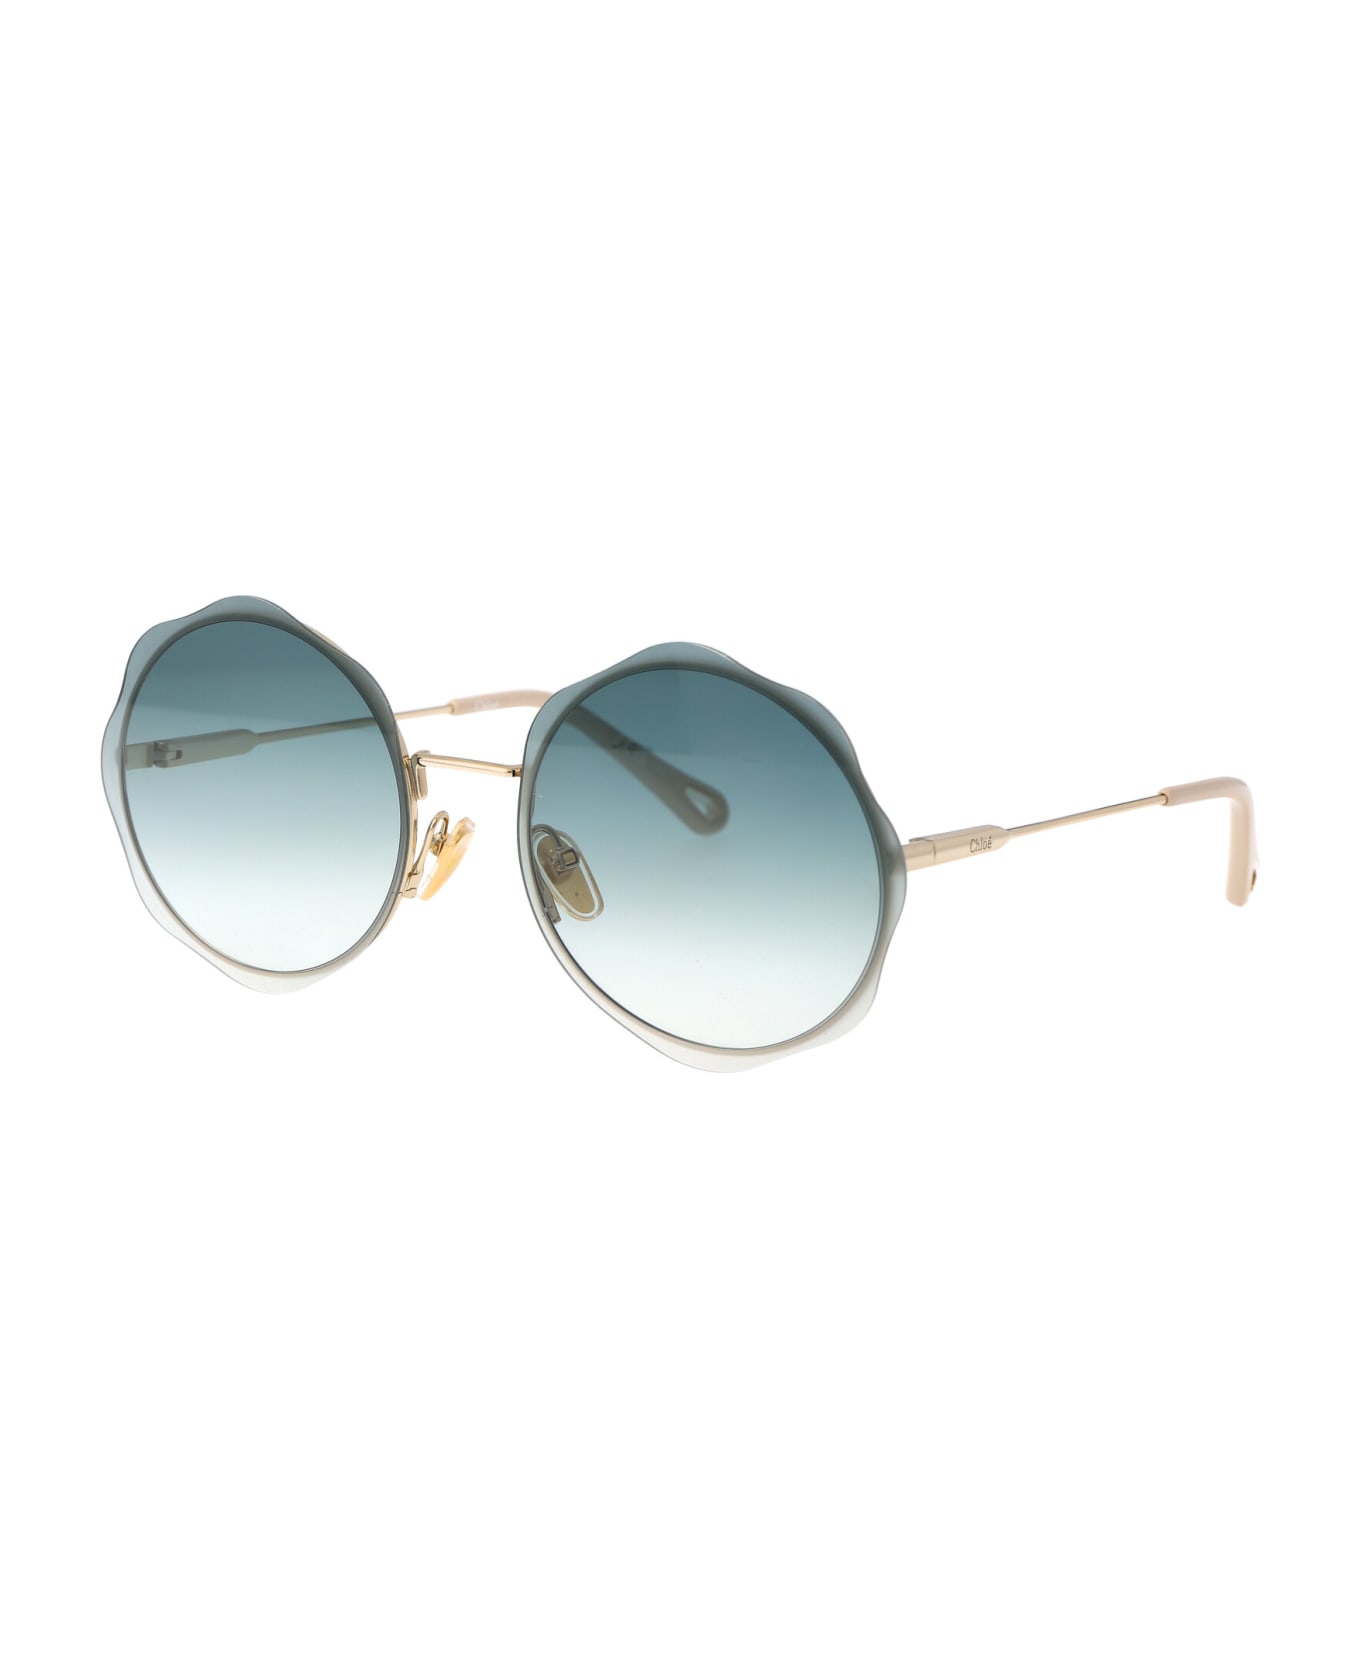 Chloé Eyewear Ch0202s Sunglasses - 002 GOLD GOLD GREEN サングラス